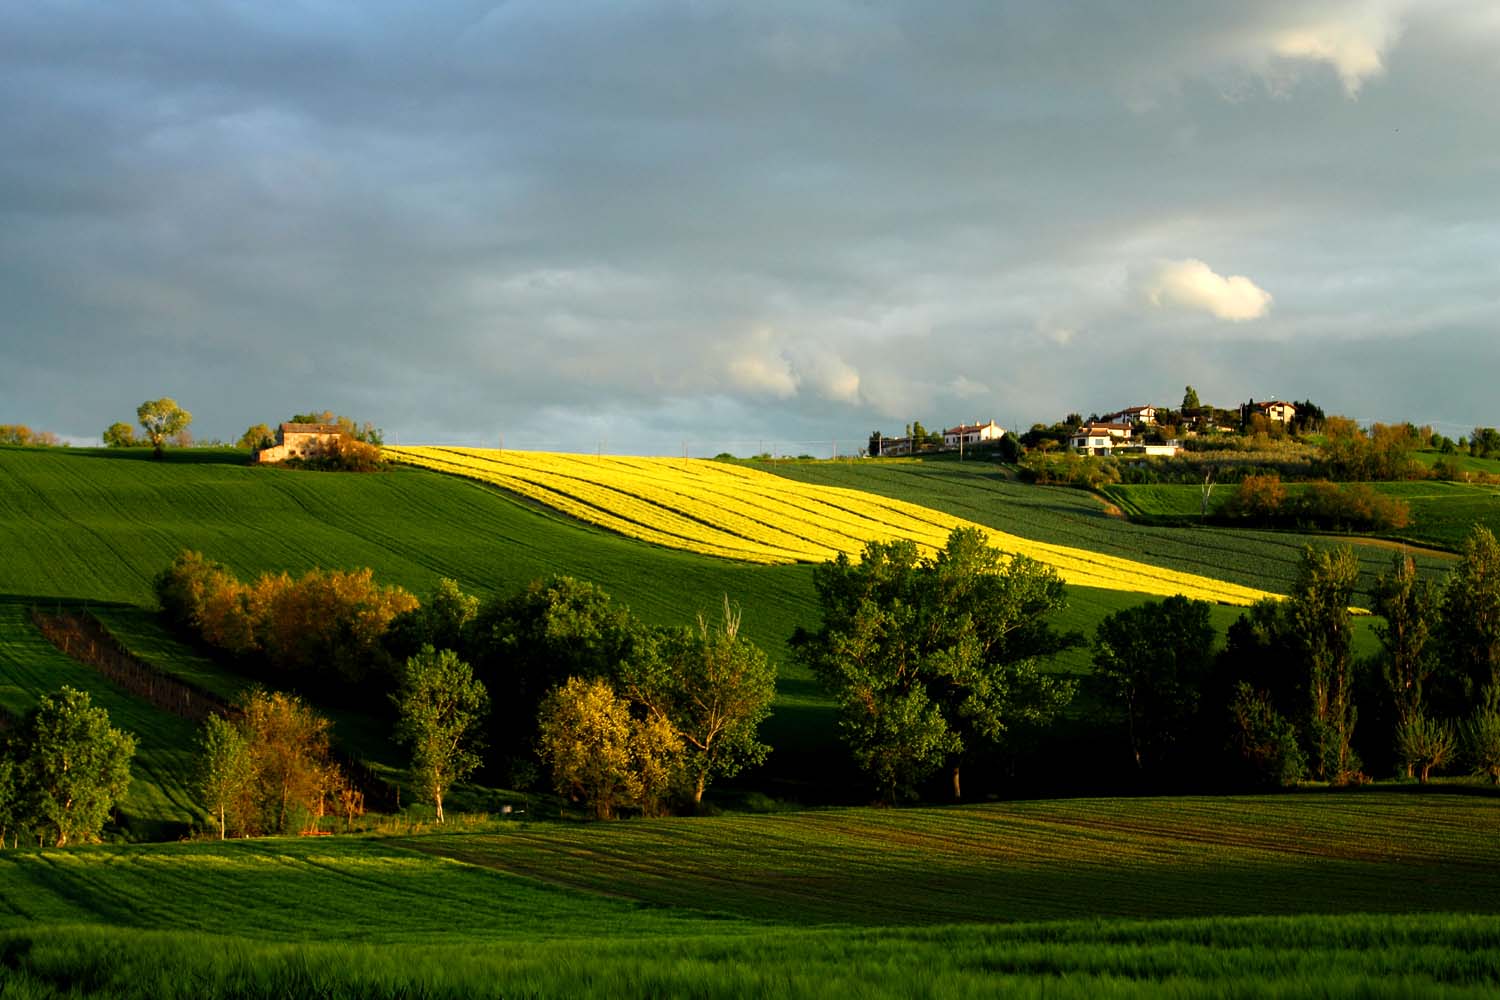 Yellow Hill